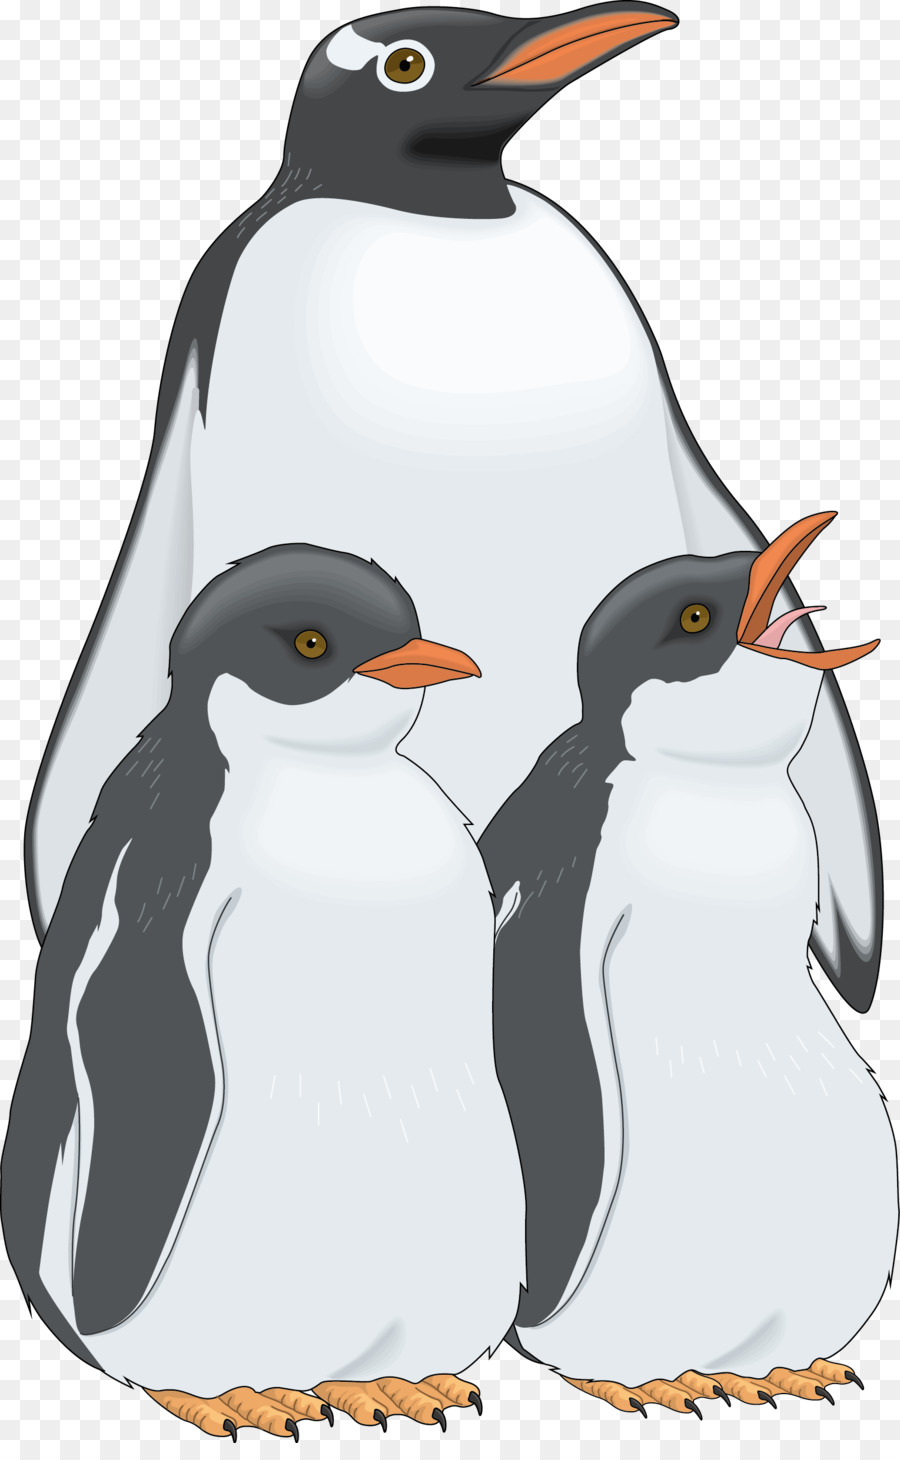 Penguin Bird - Hand-painted three penguins Vector png download - 1529*2452 - Free Transparent Penguin png Download.